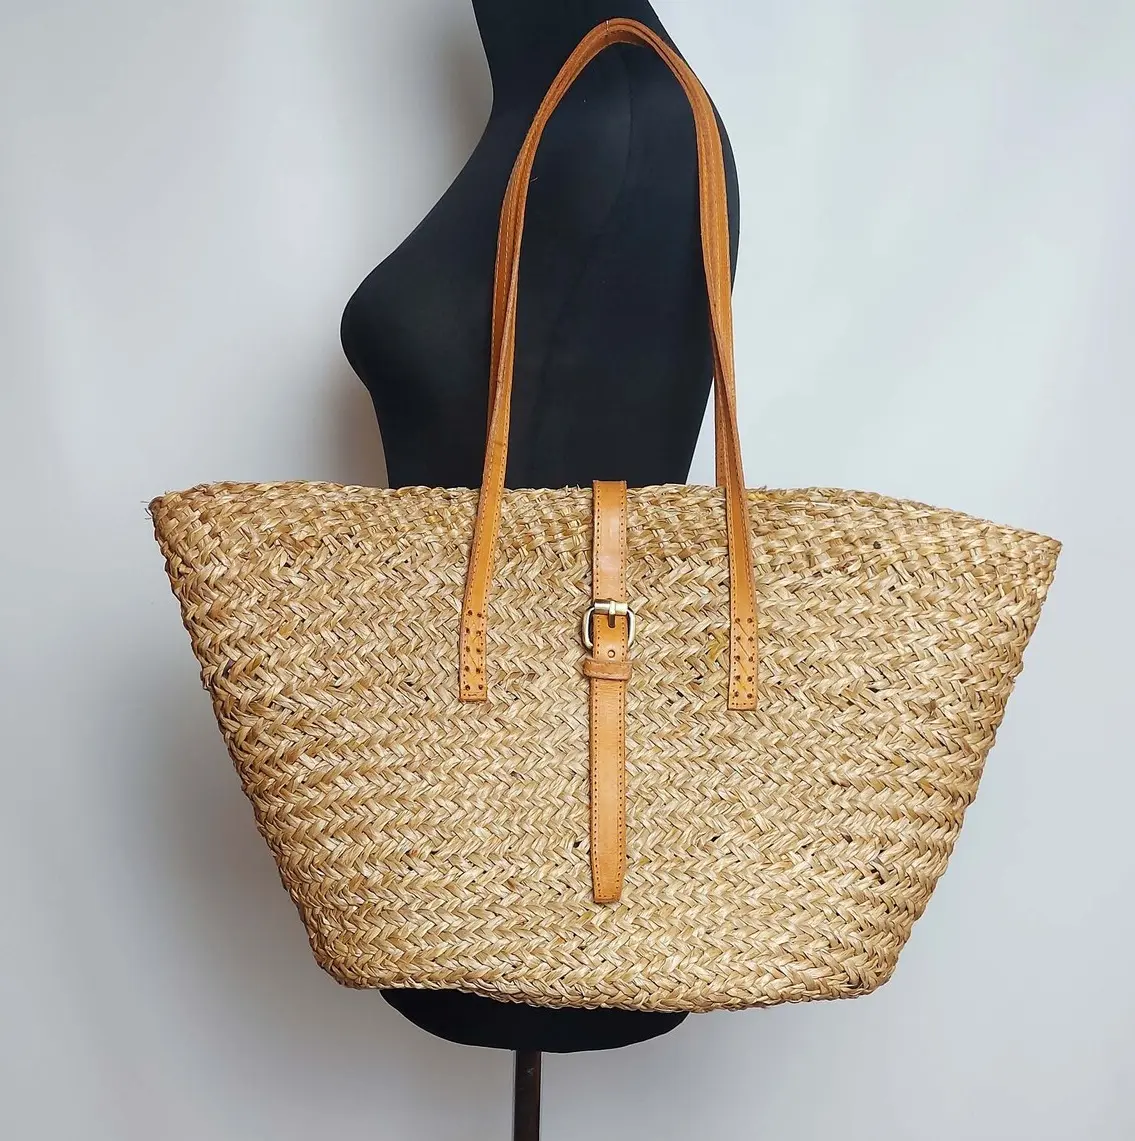 Hot Design !!! Natural Straw Seagrass Shopping Bags Vintage Summer Beach Shoulder Crossbody Handbag Made in Vietnam Manufacturer